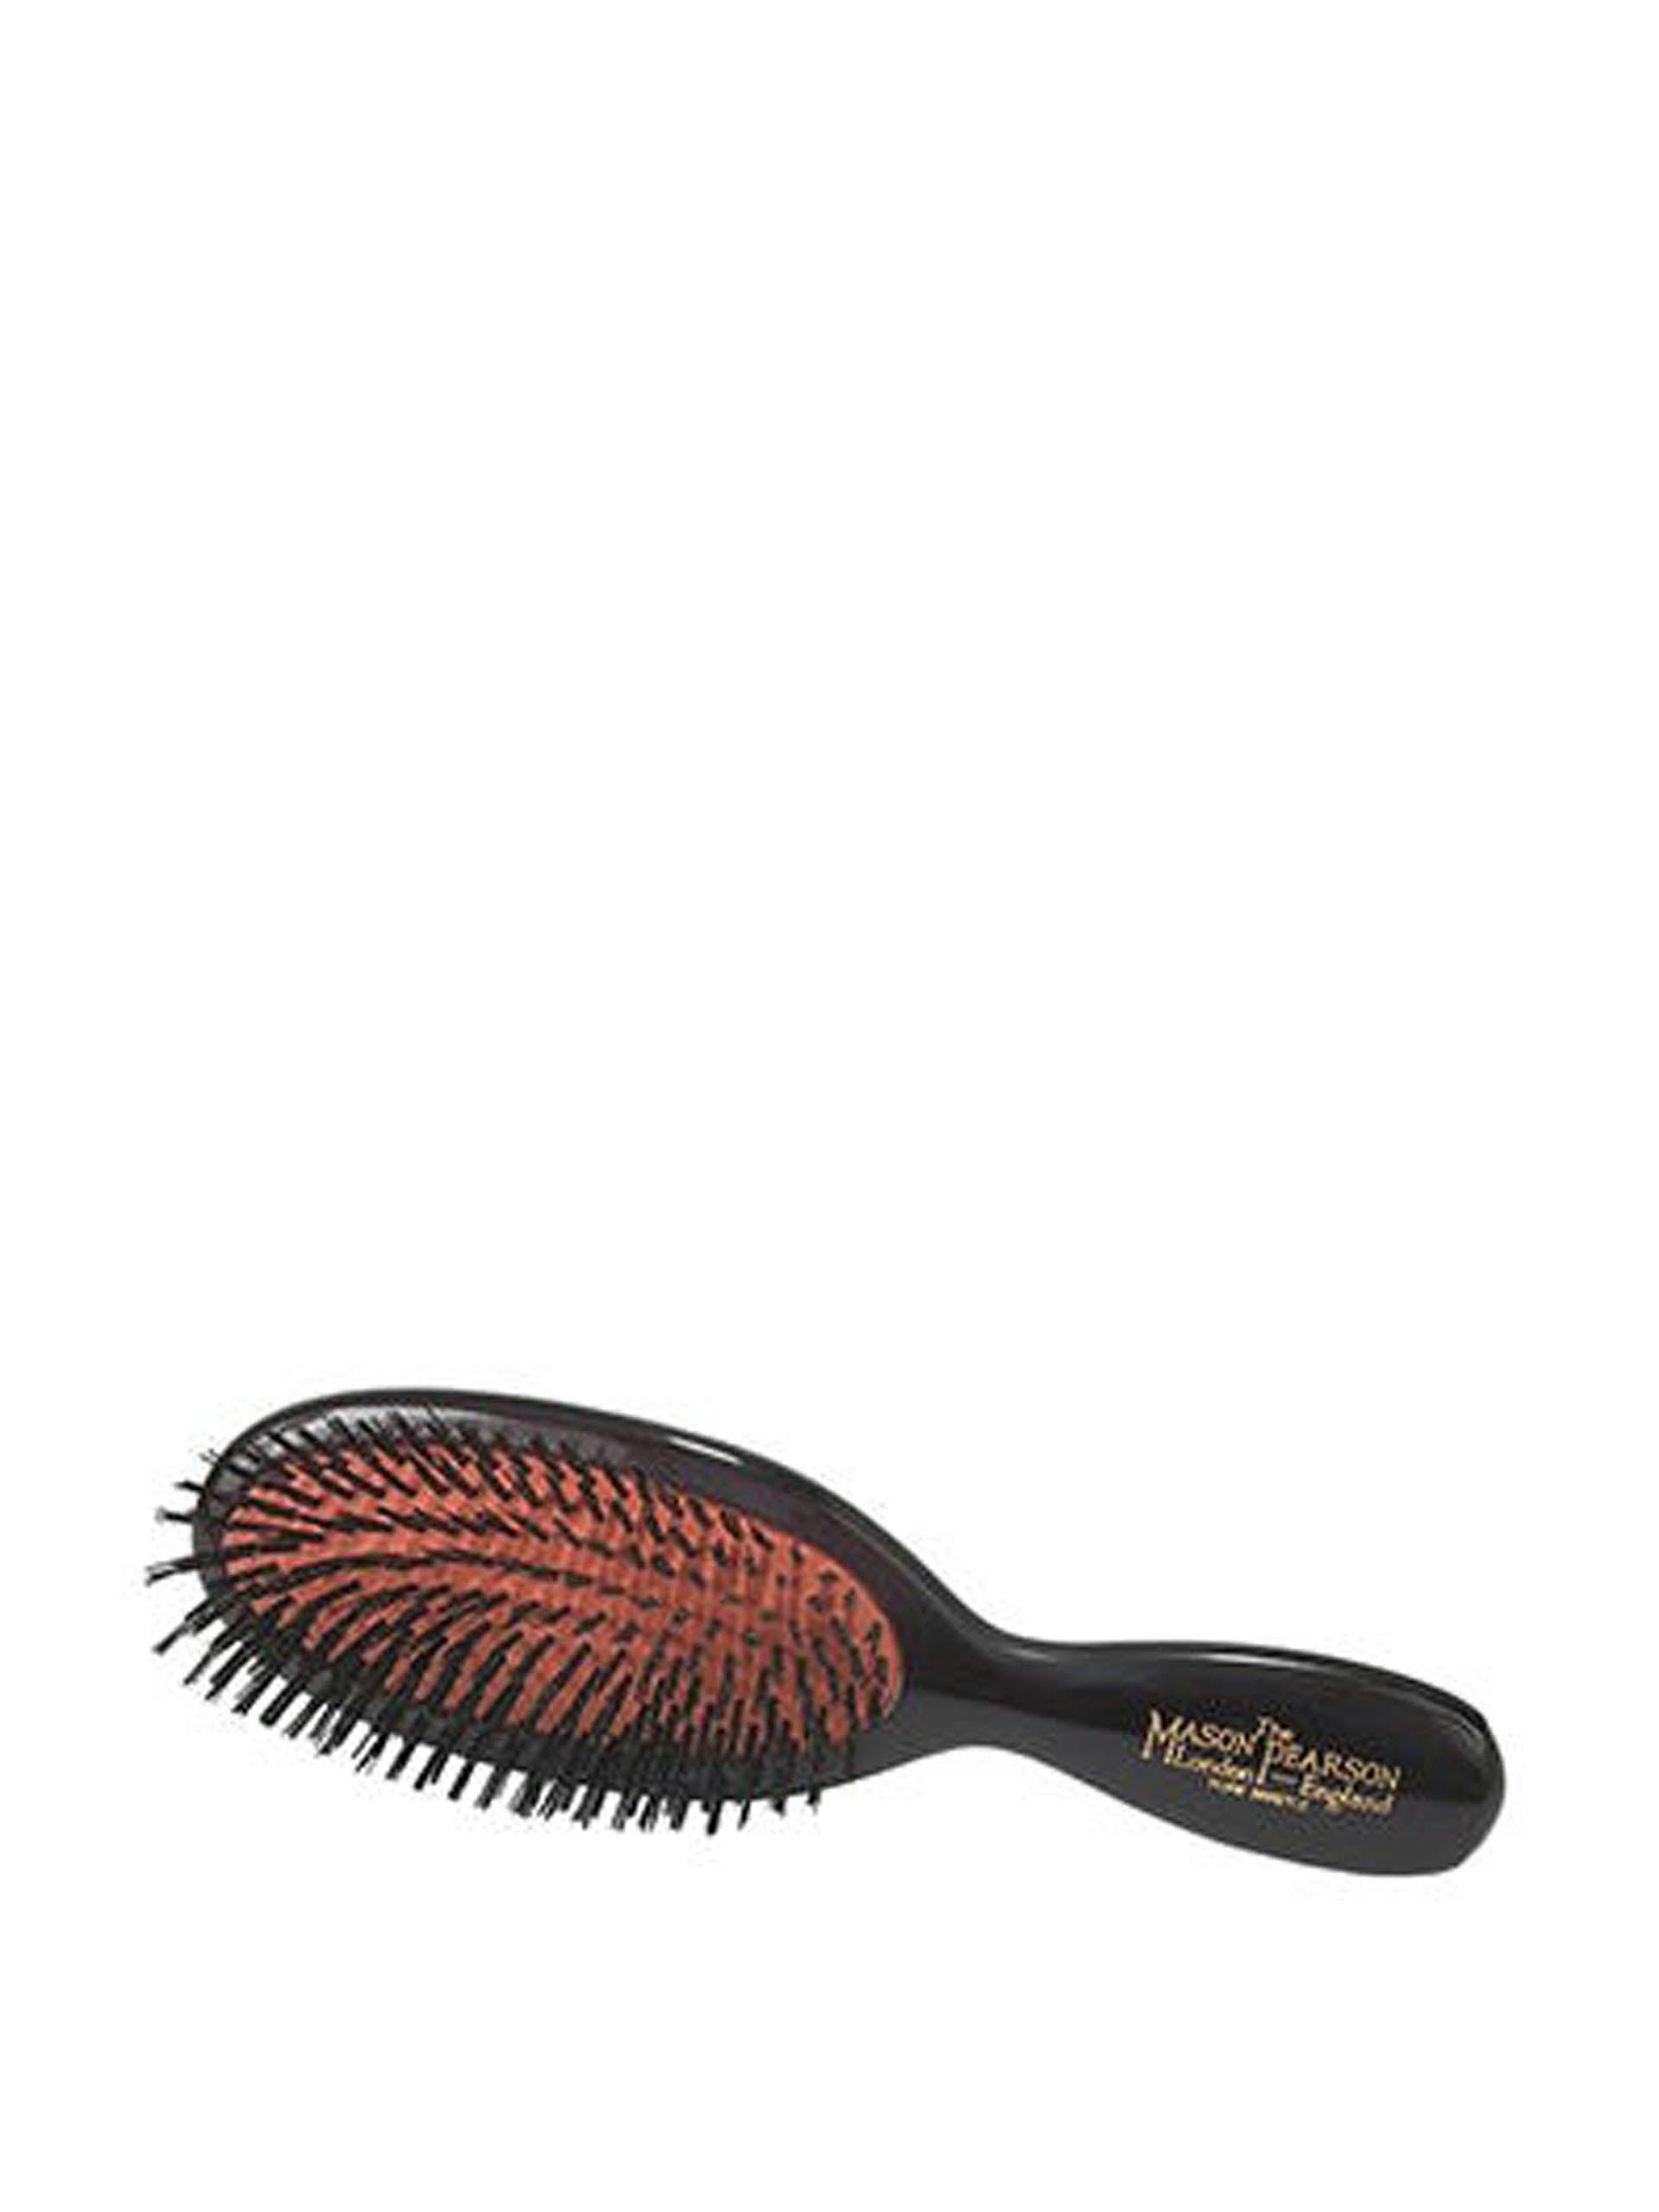 Pocket bristle hairbrush